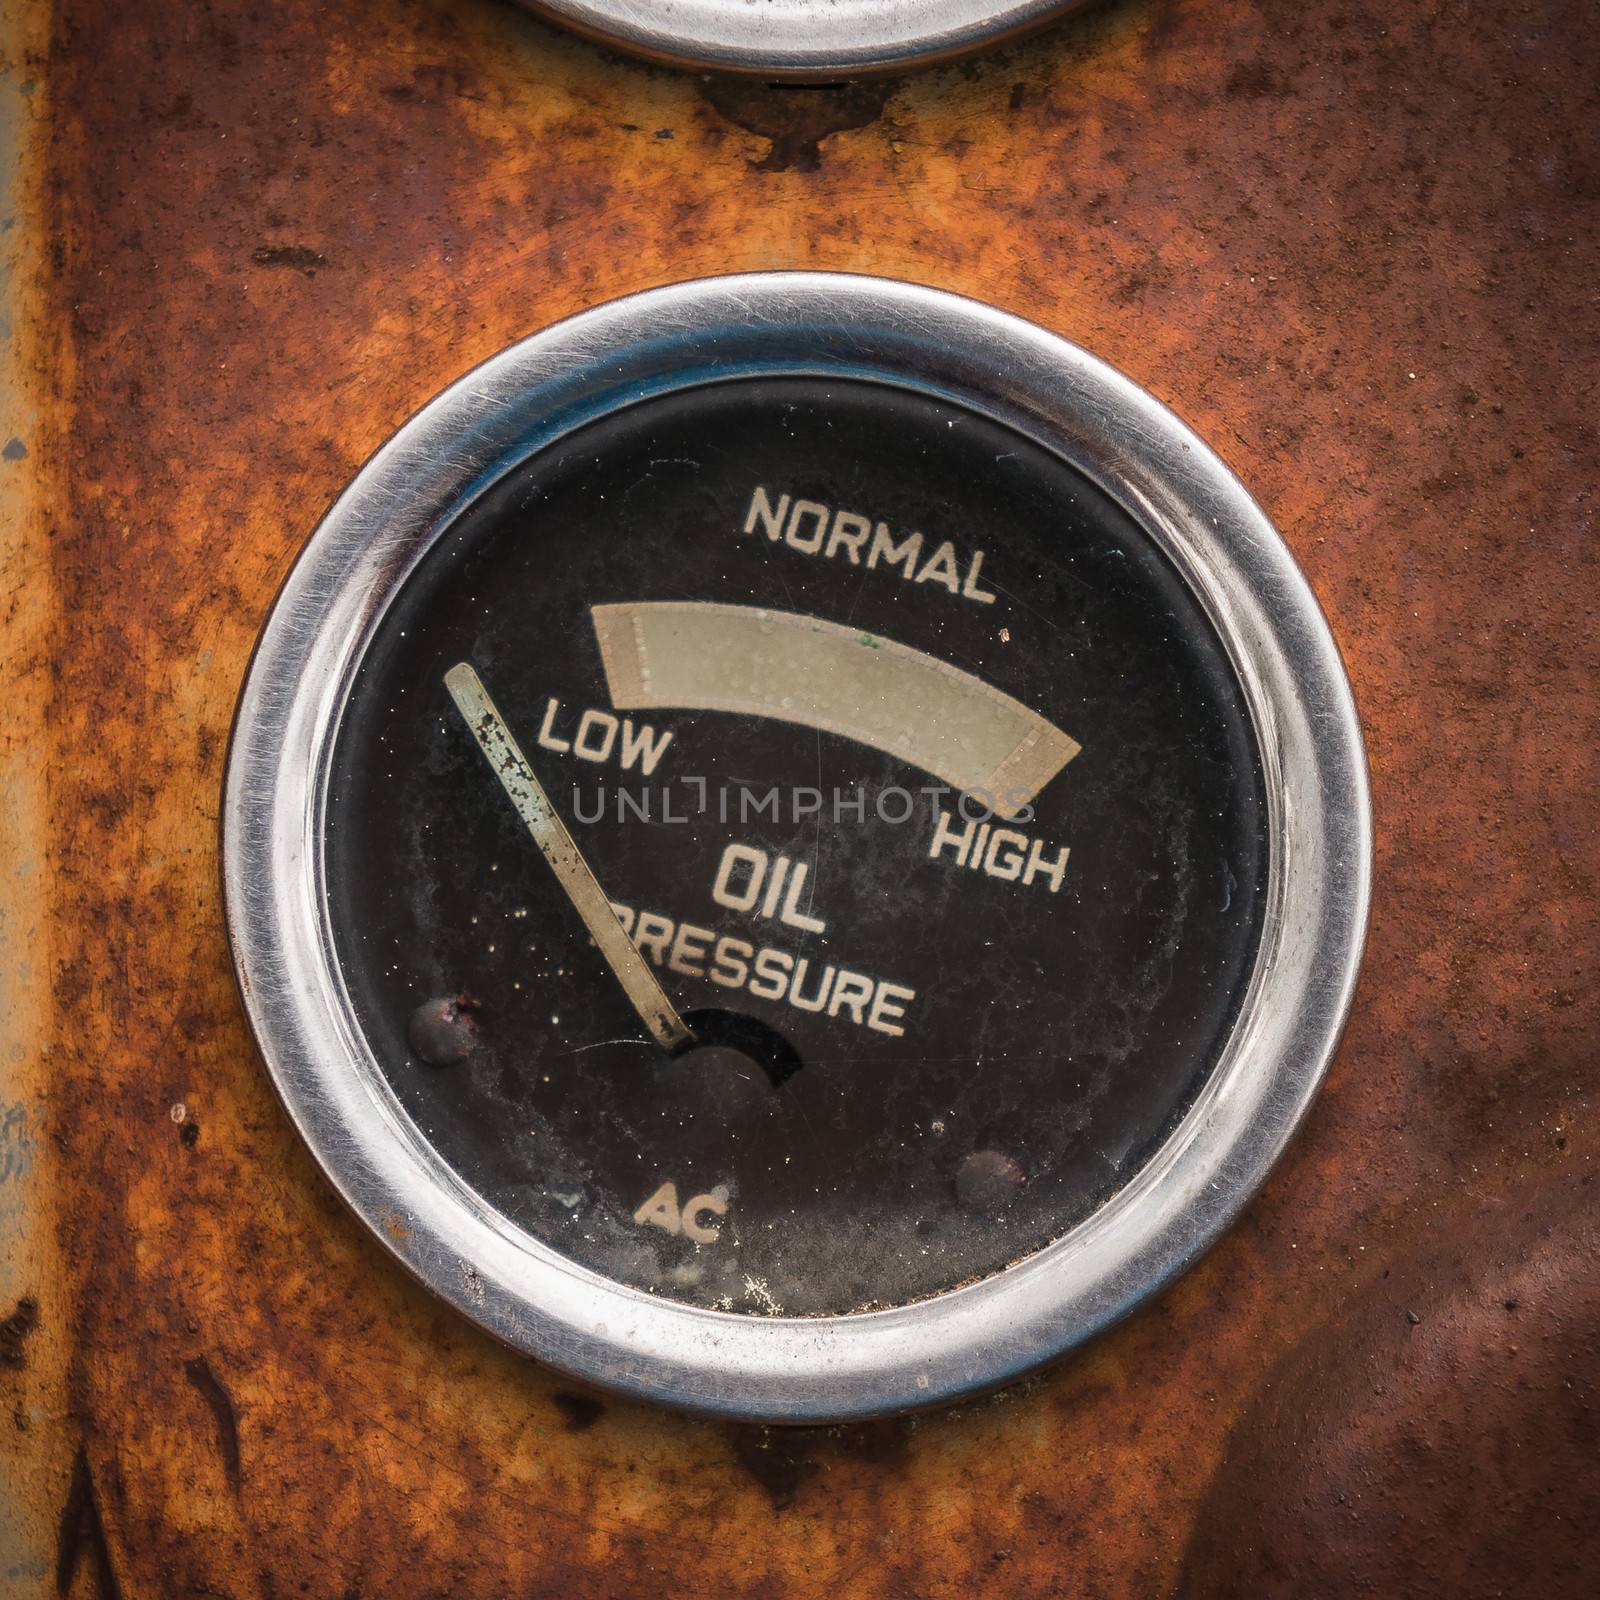 Old pressure gauge by gilmanshin